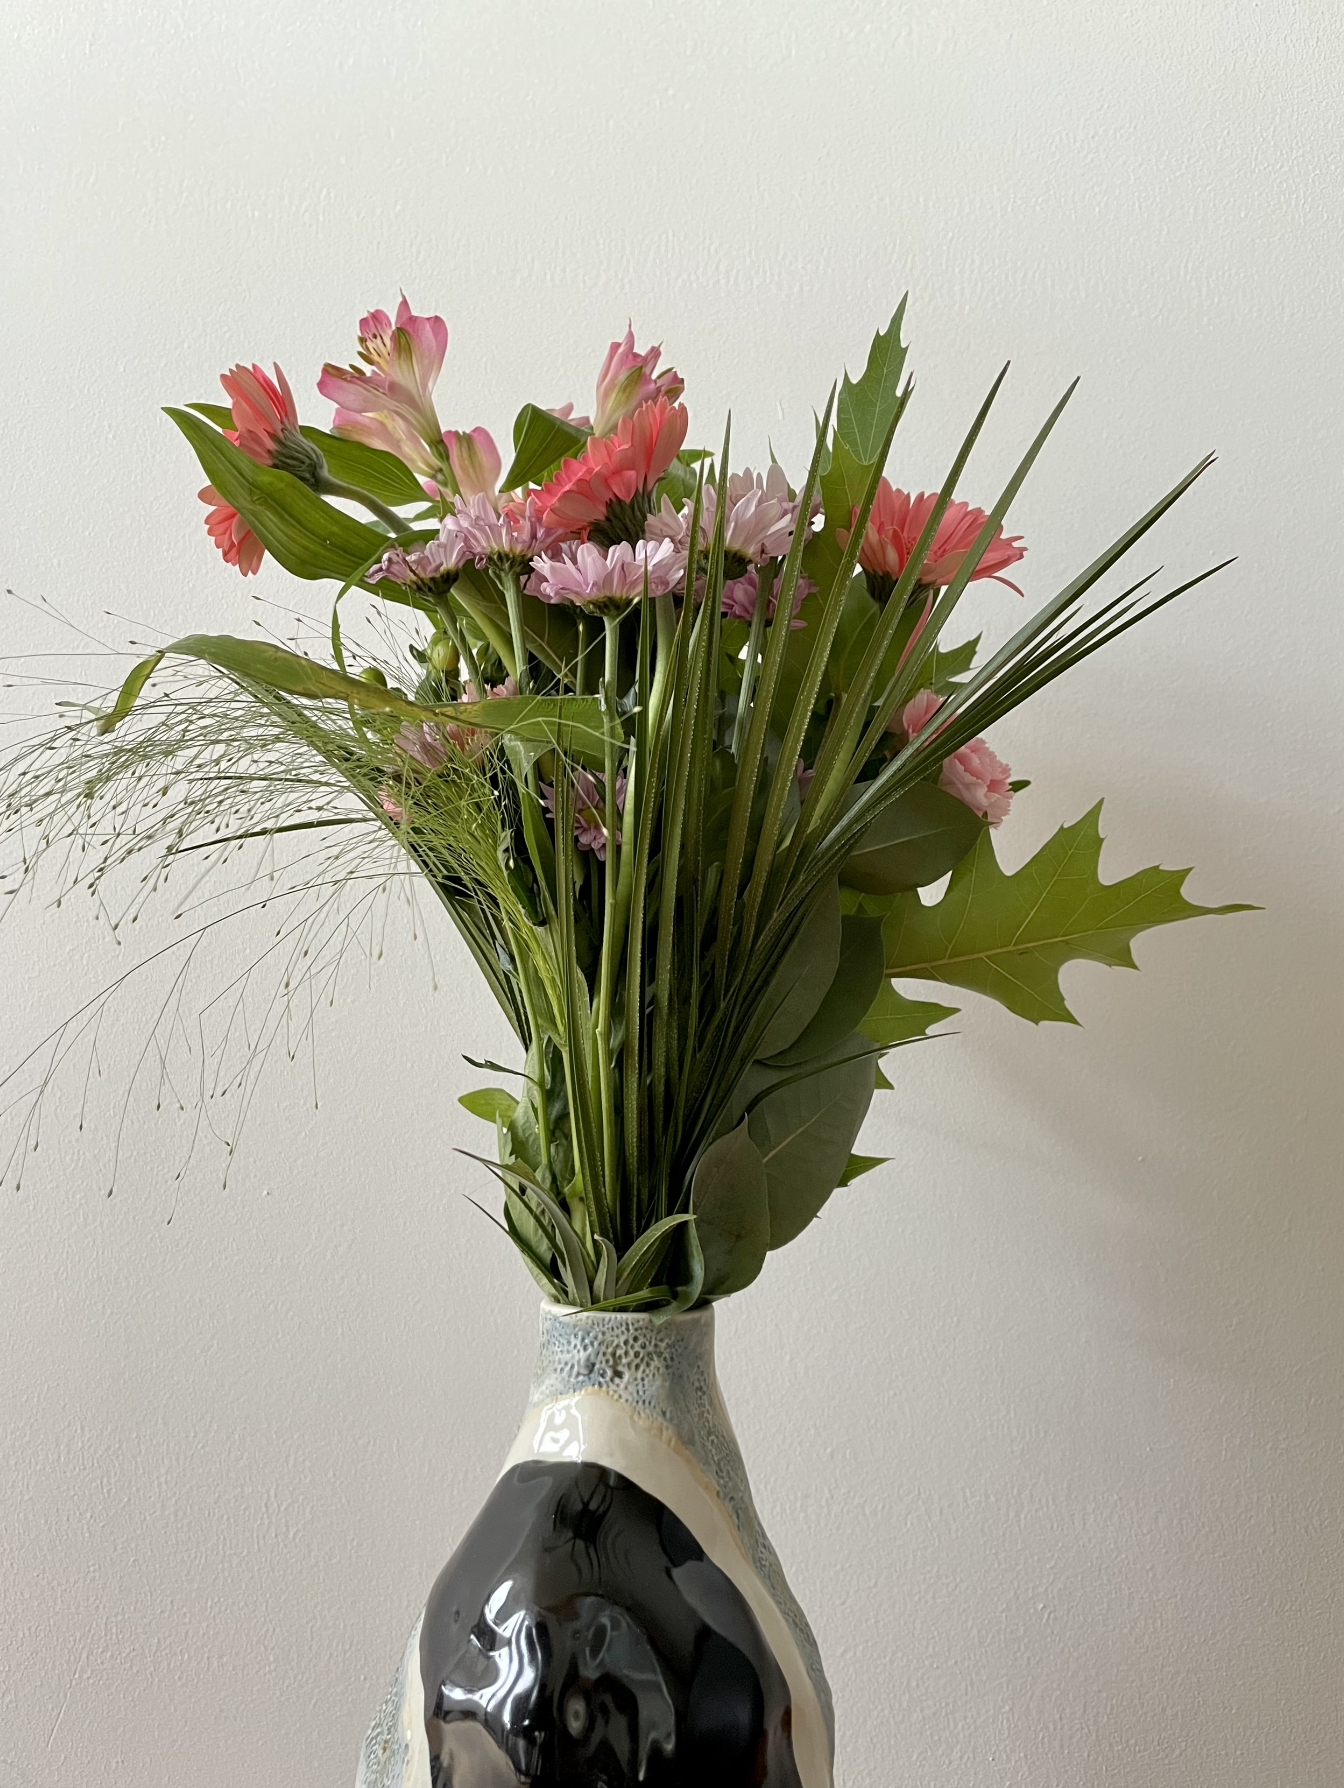 flowers 🌸 💐 
#hay #vase #blue #black #interior #decoration 